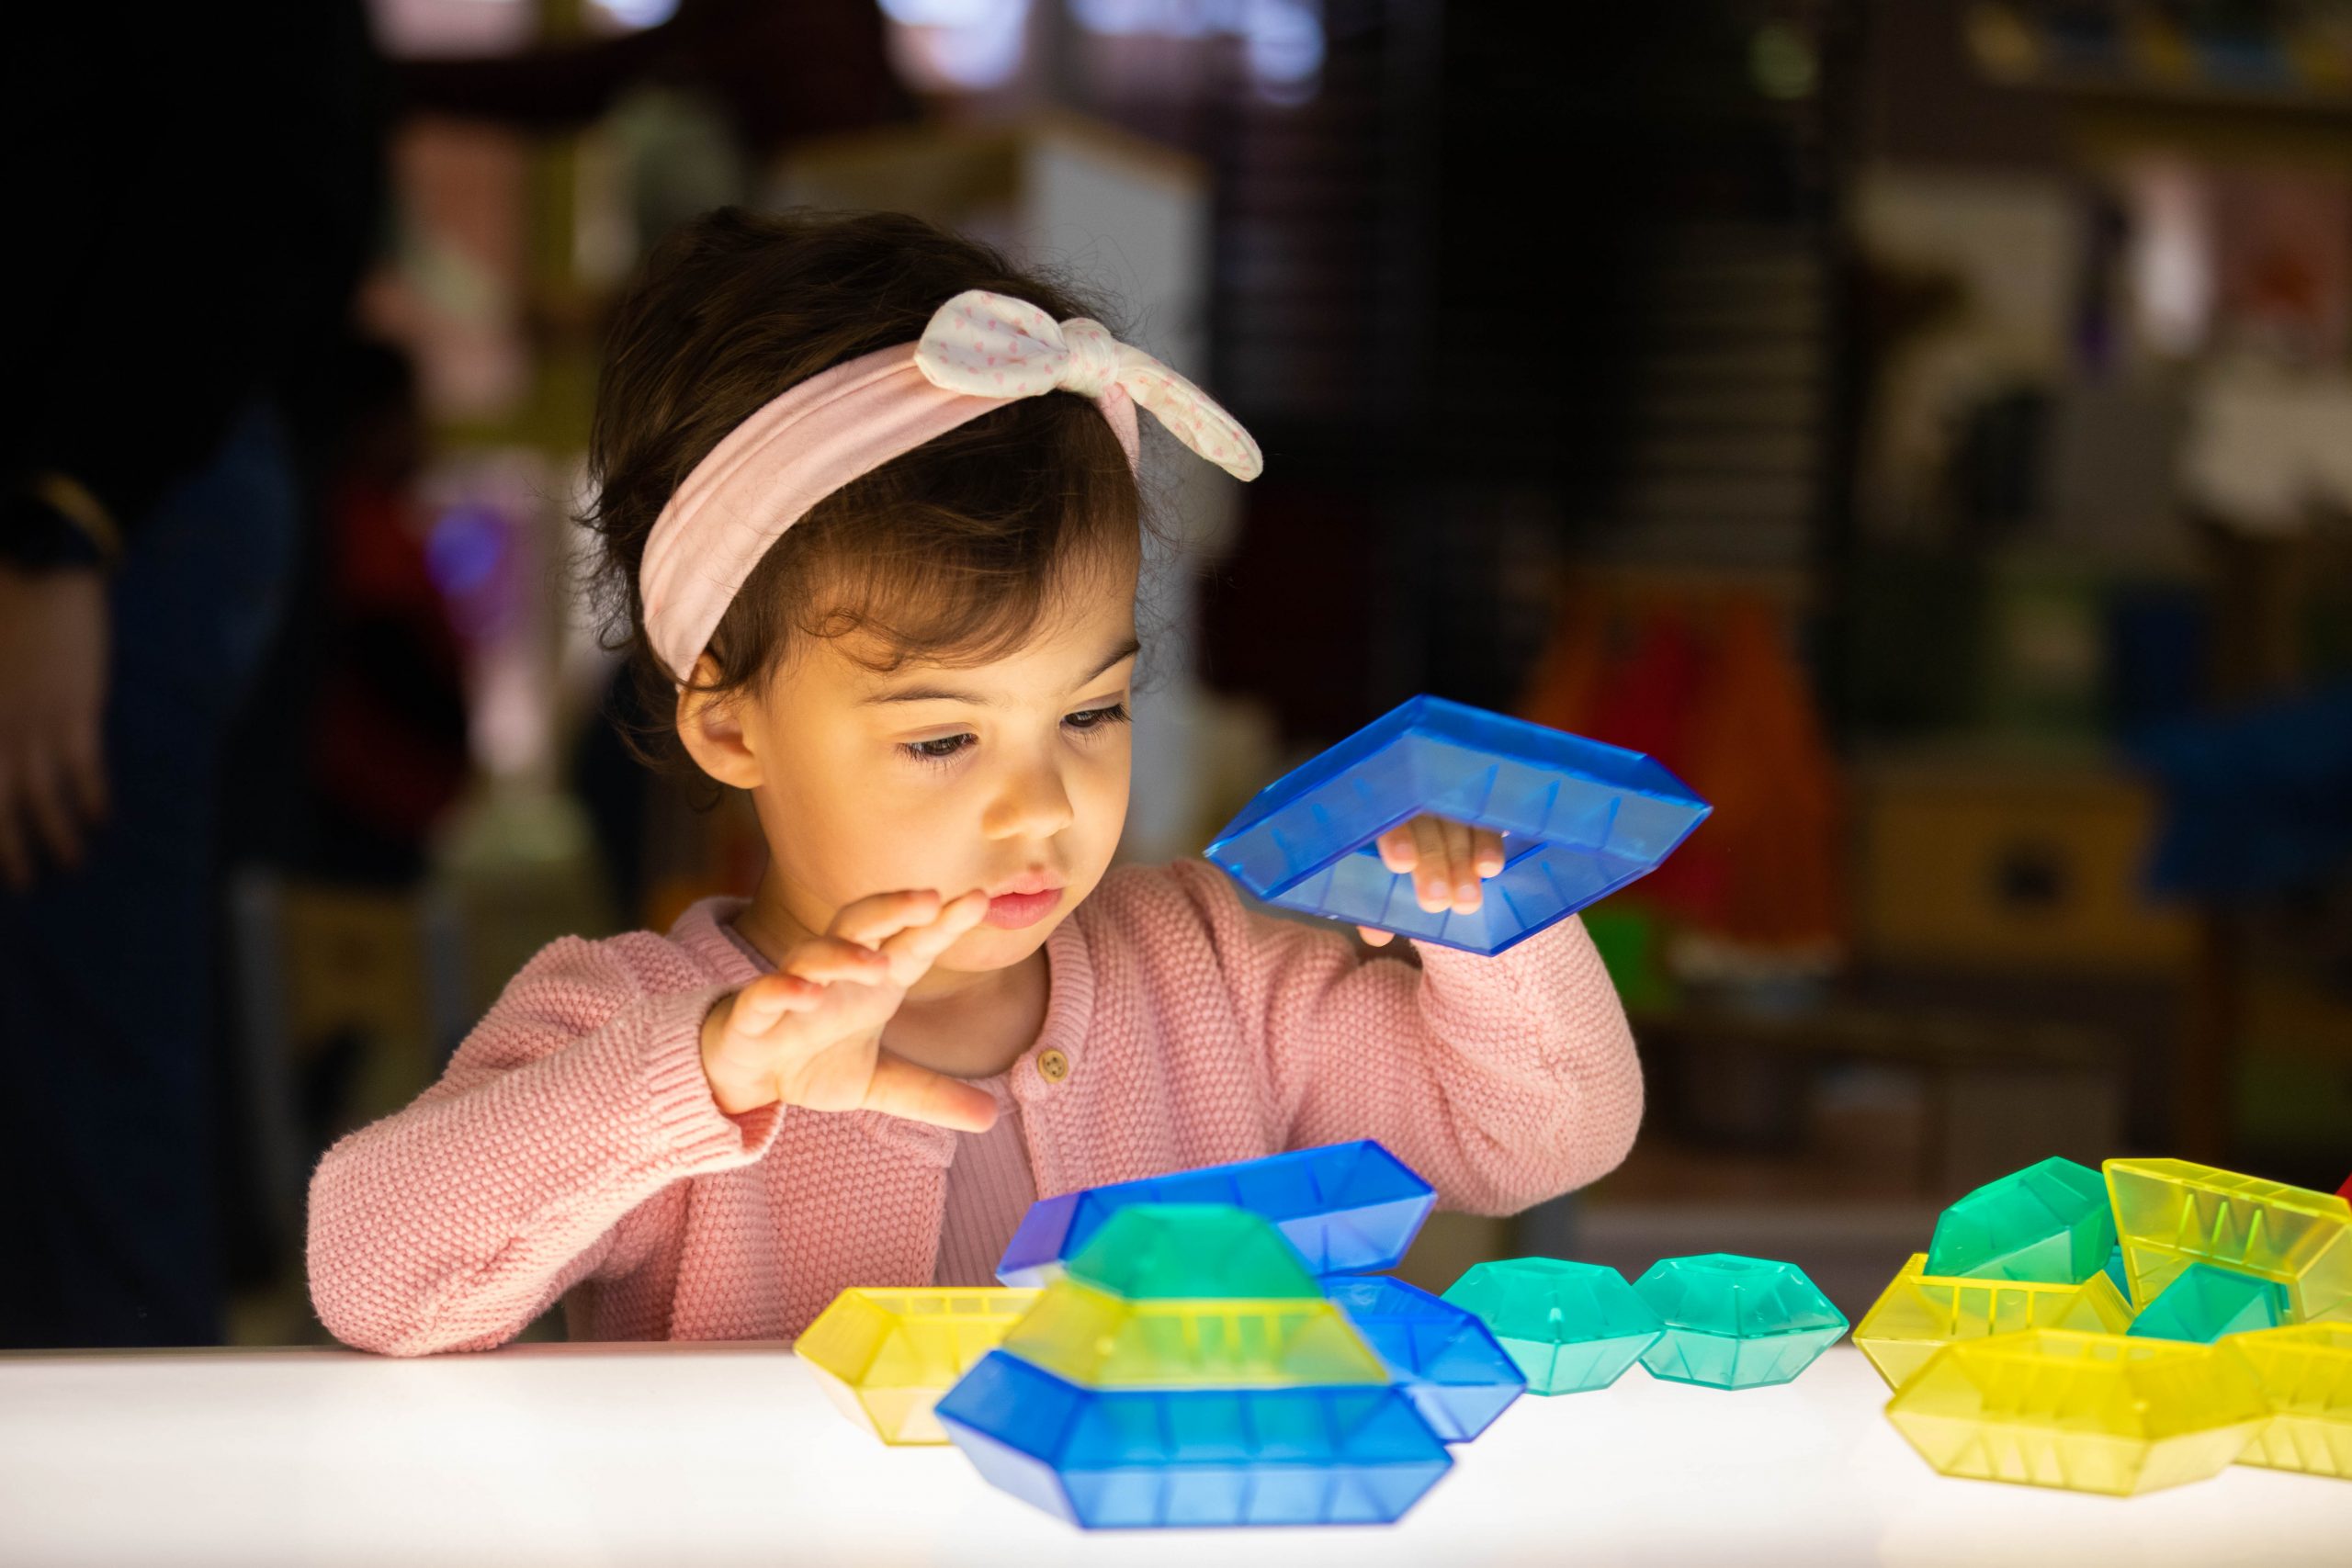 Toddler playing with blocks at 鶹ƵAV playgroup